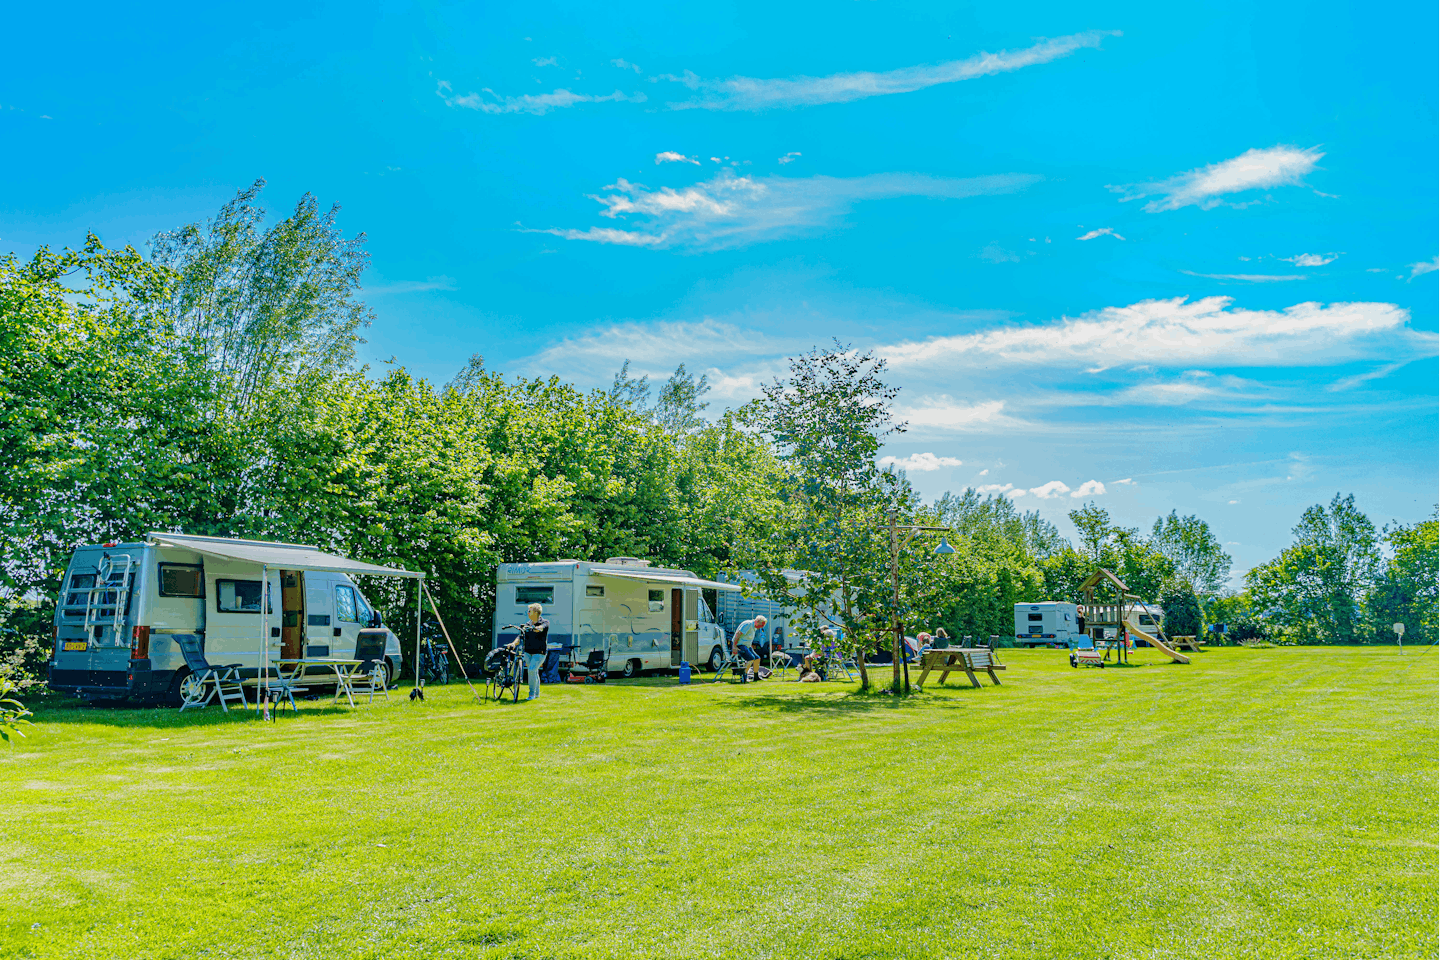 Vodatent @ Mini Camping Drentse Monden - Standplätze auf dem Campingplatz